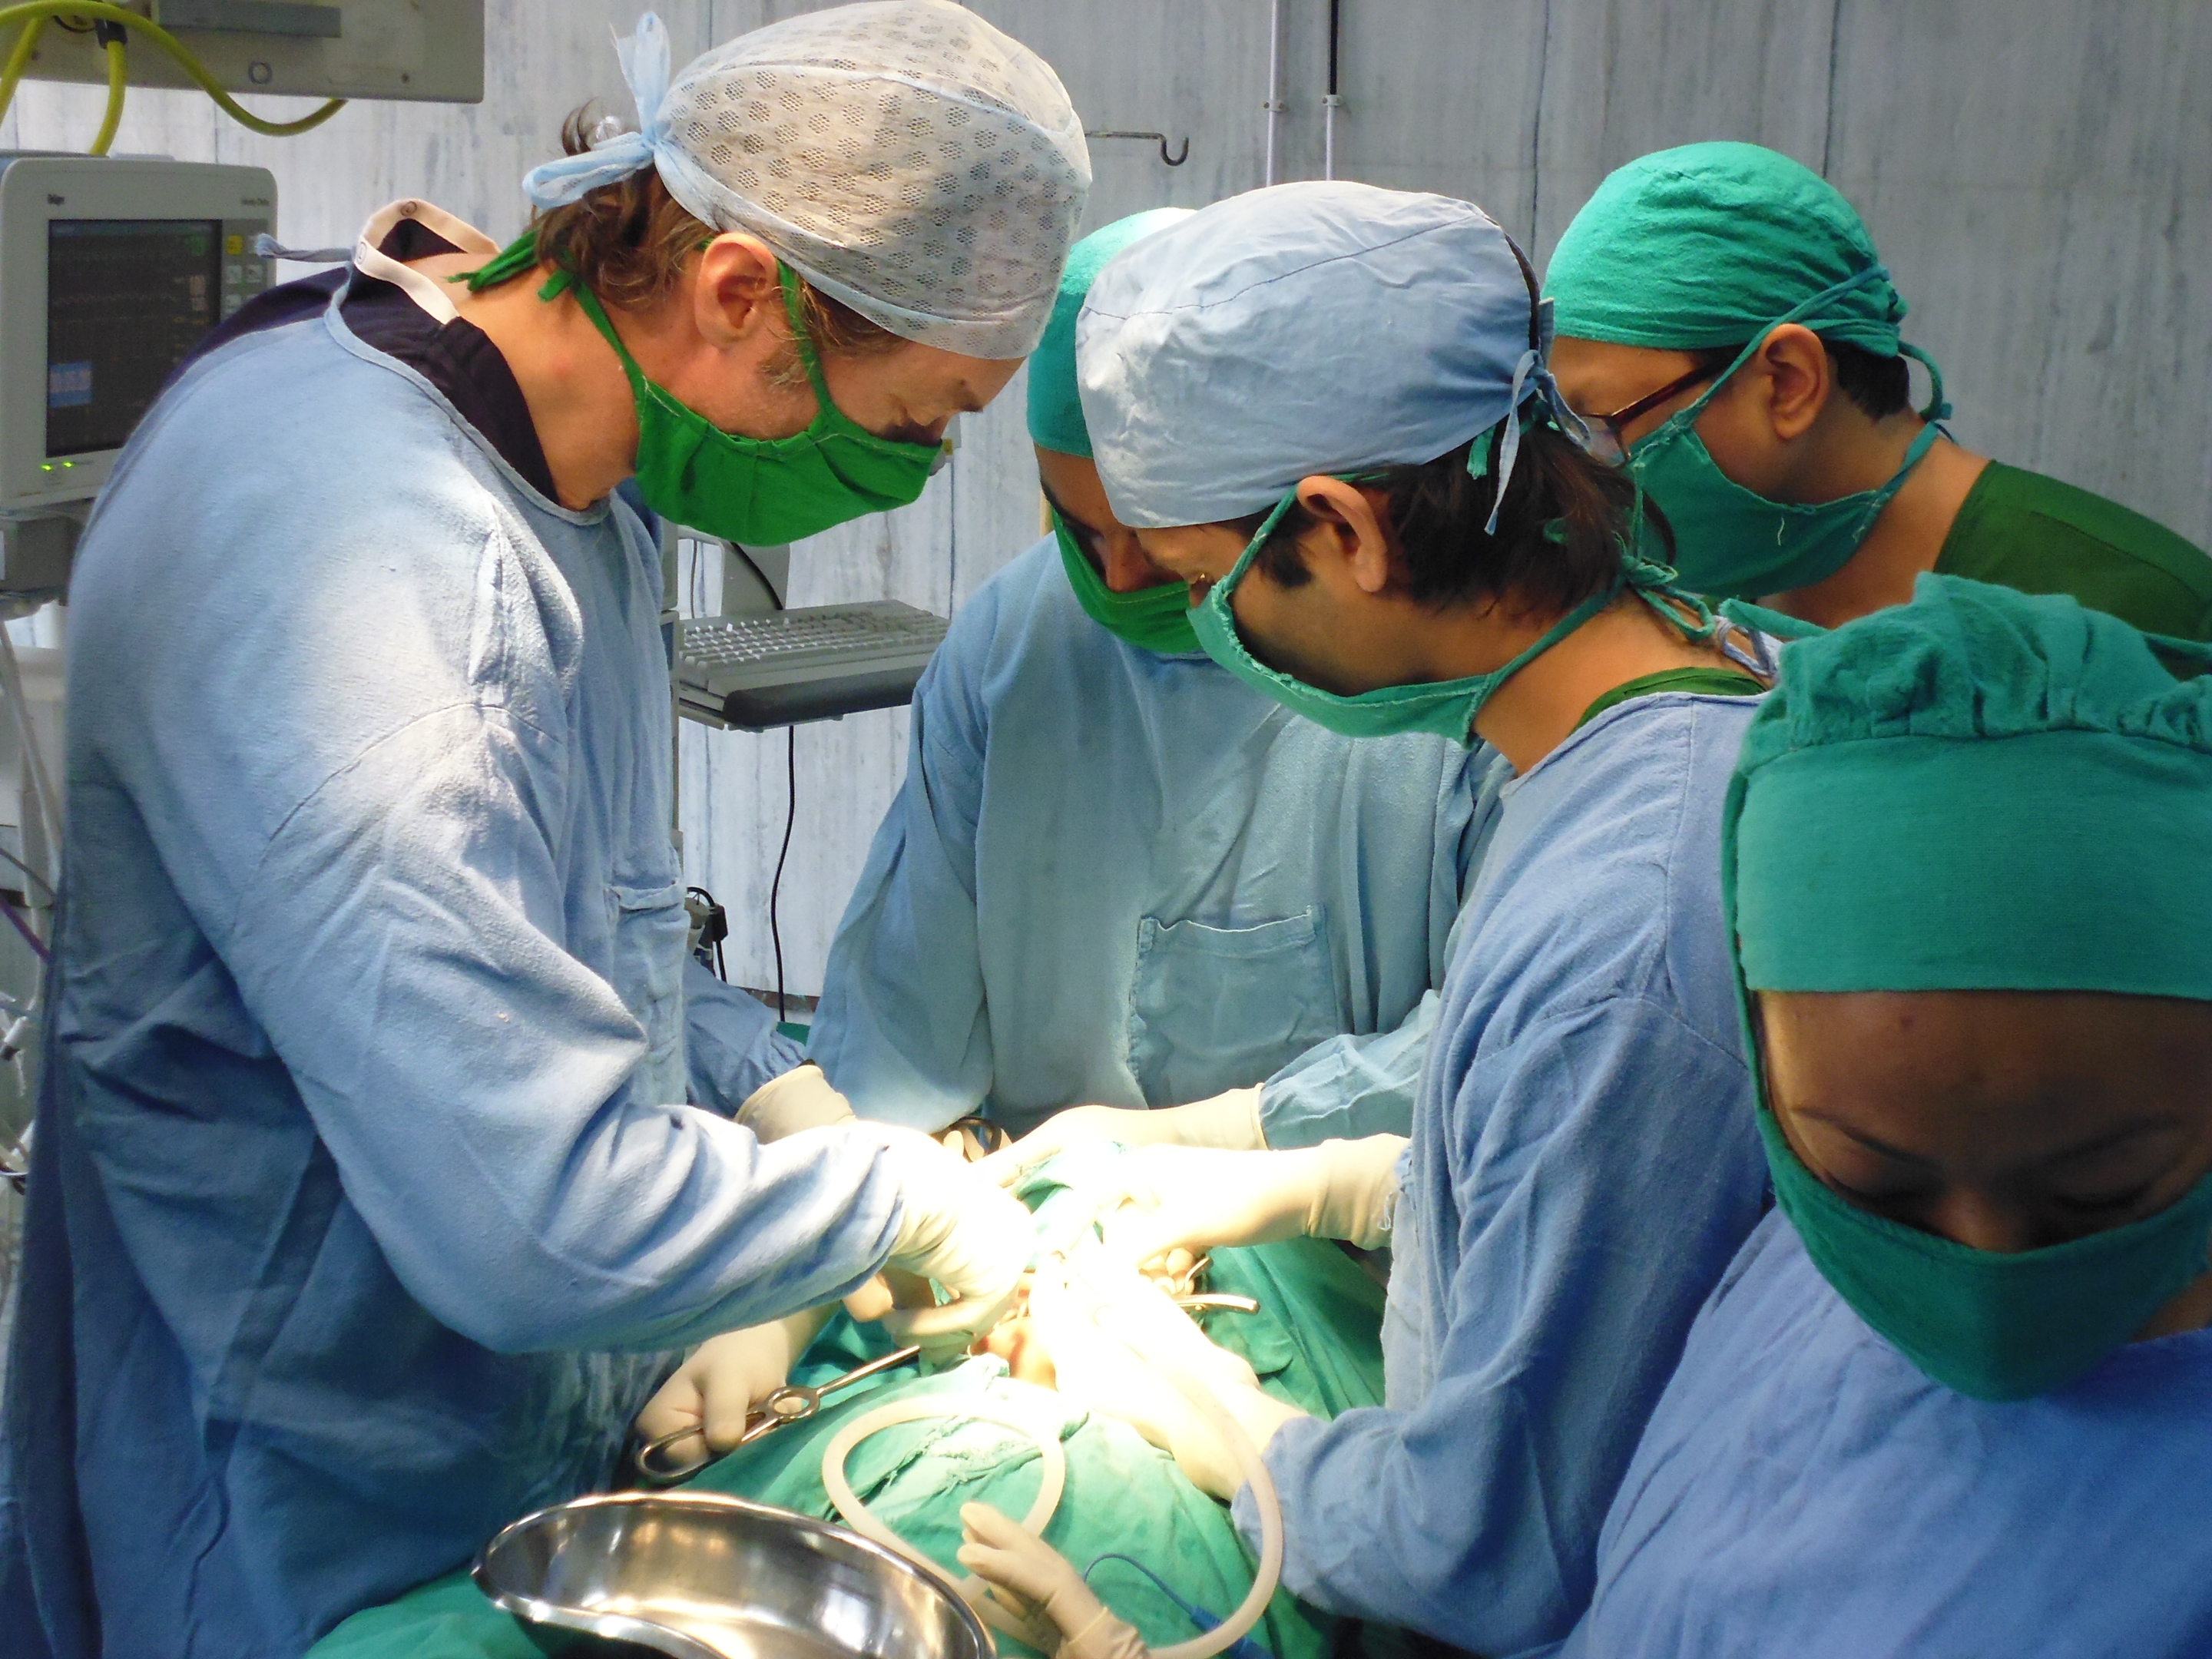 Surgeon Sean Laverick performing surgery